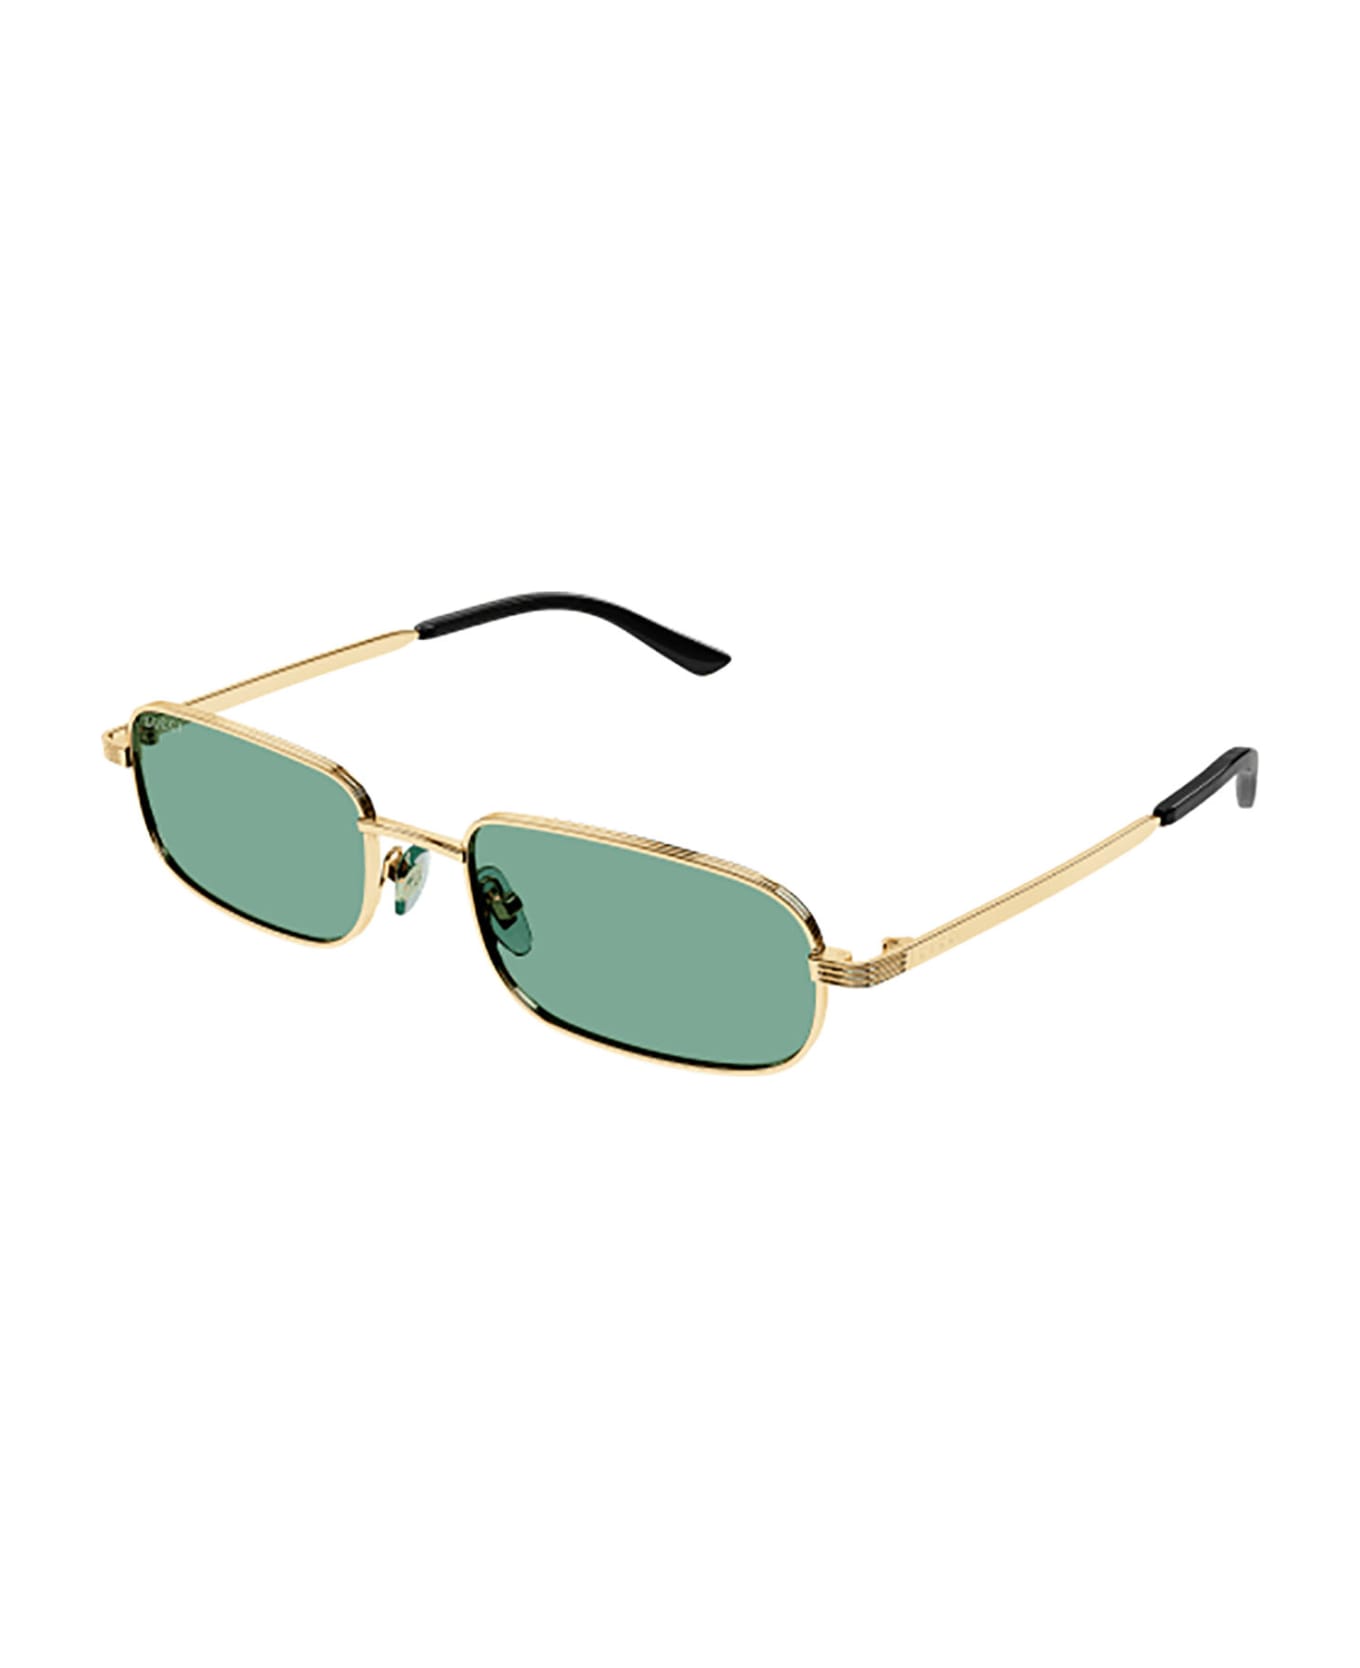 Gucci Eyewear GG1457S Sunglasses - Gold Gold Green